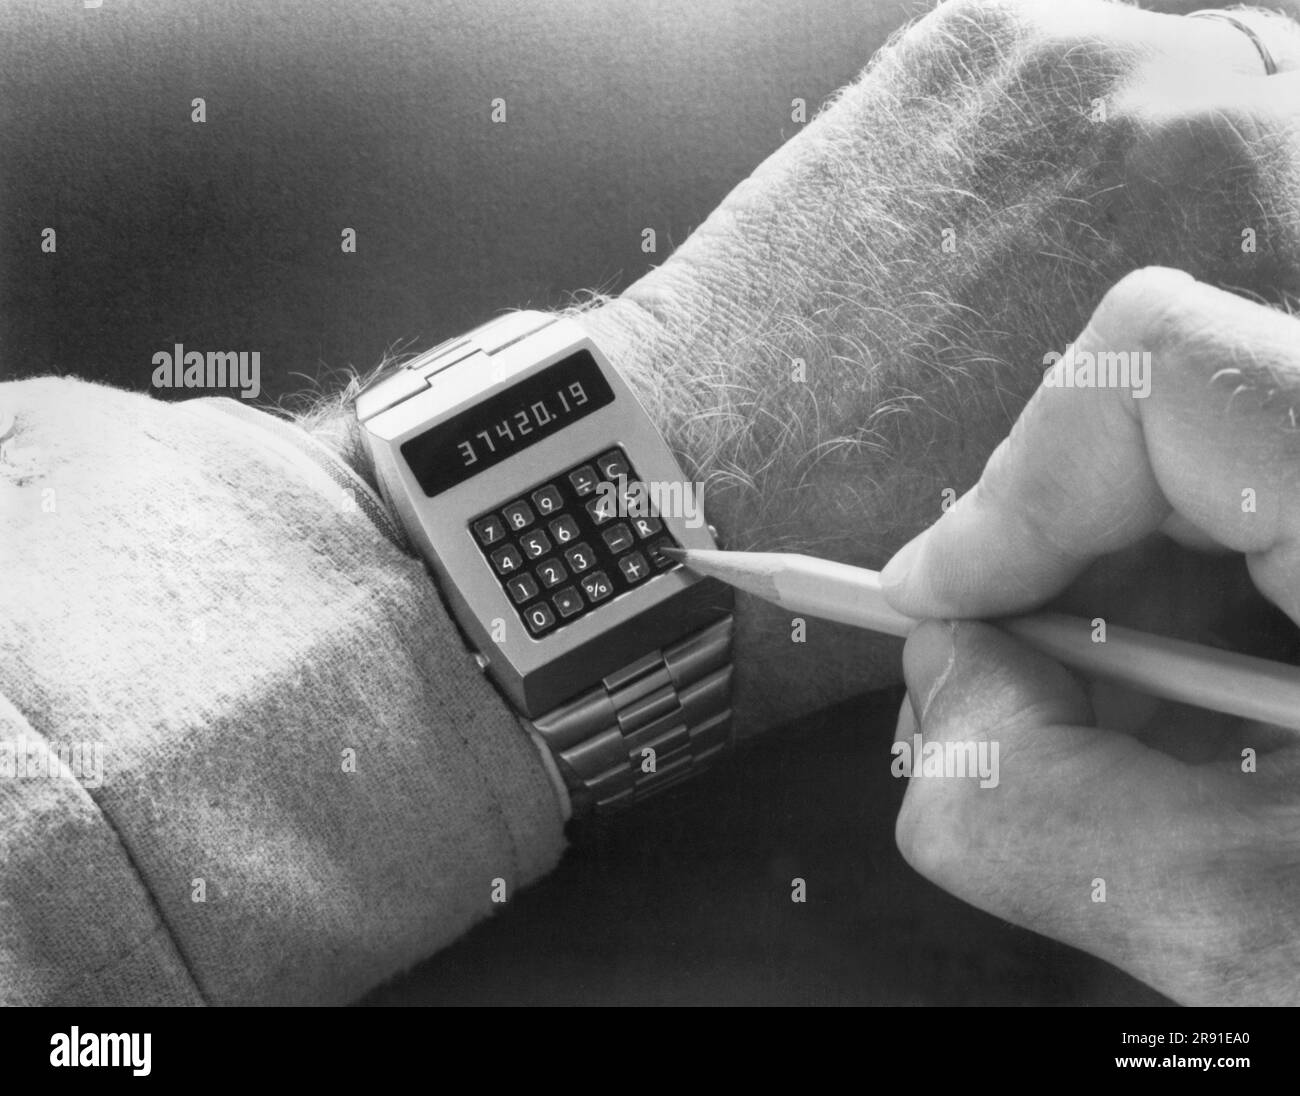 Newport Beach, California:  c. 1974 The Hughes Aircraft Company's digital combination calculator and watch. Stock Photo